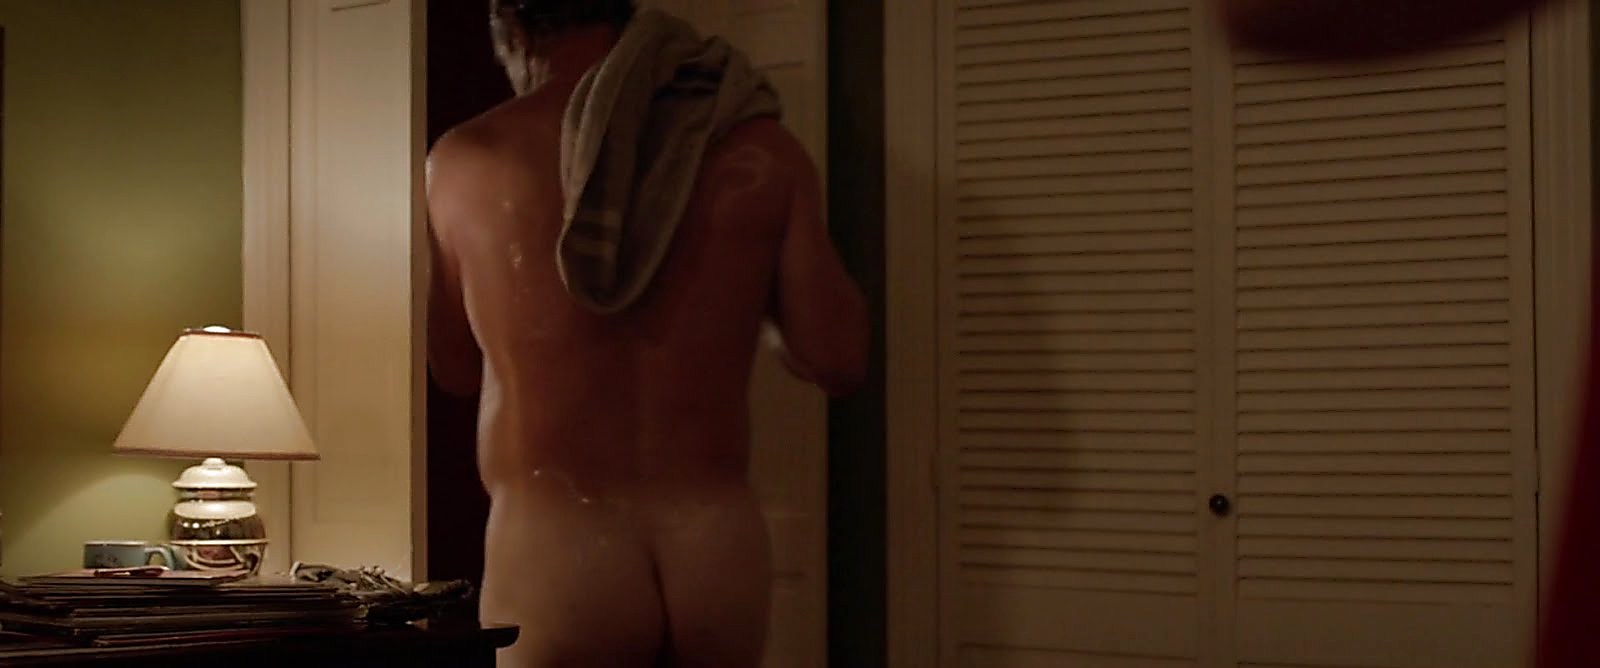 Christopher Meloni sexy shirtless scene November 23, 2017, 12pm